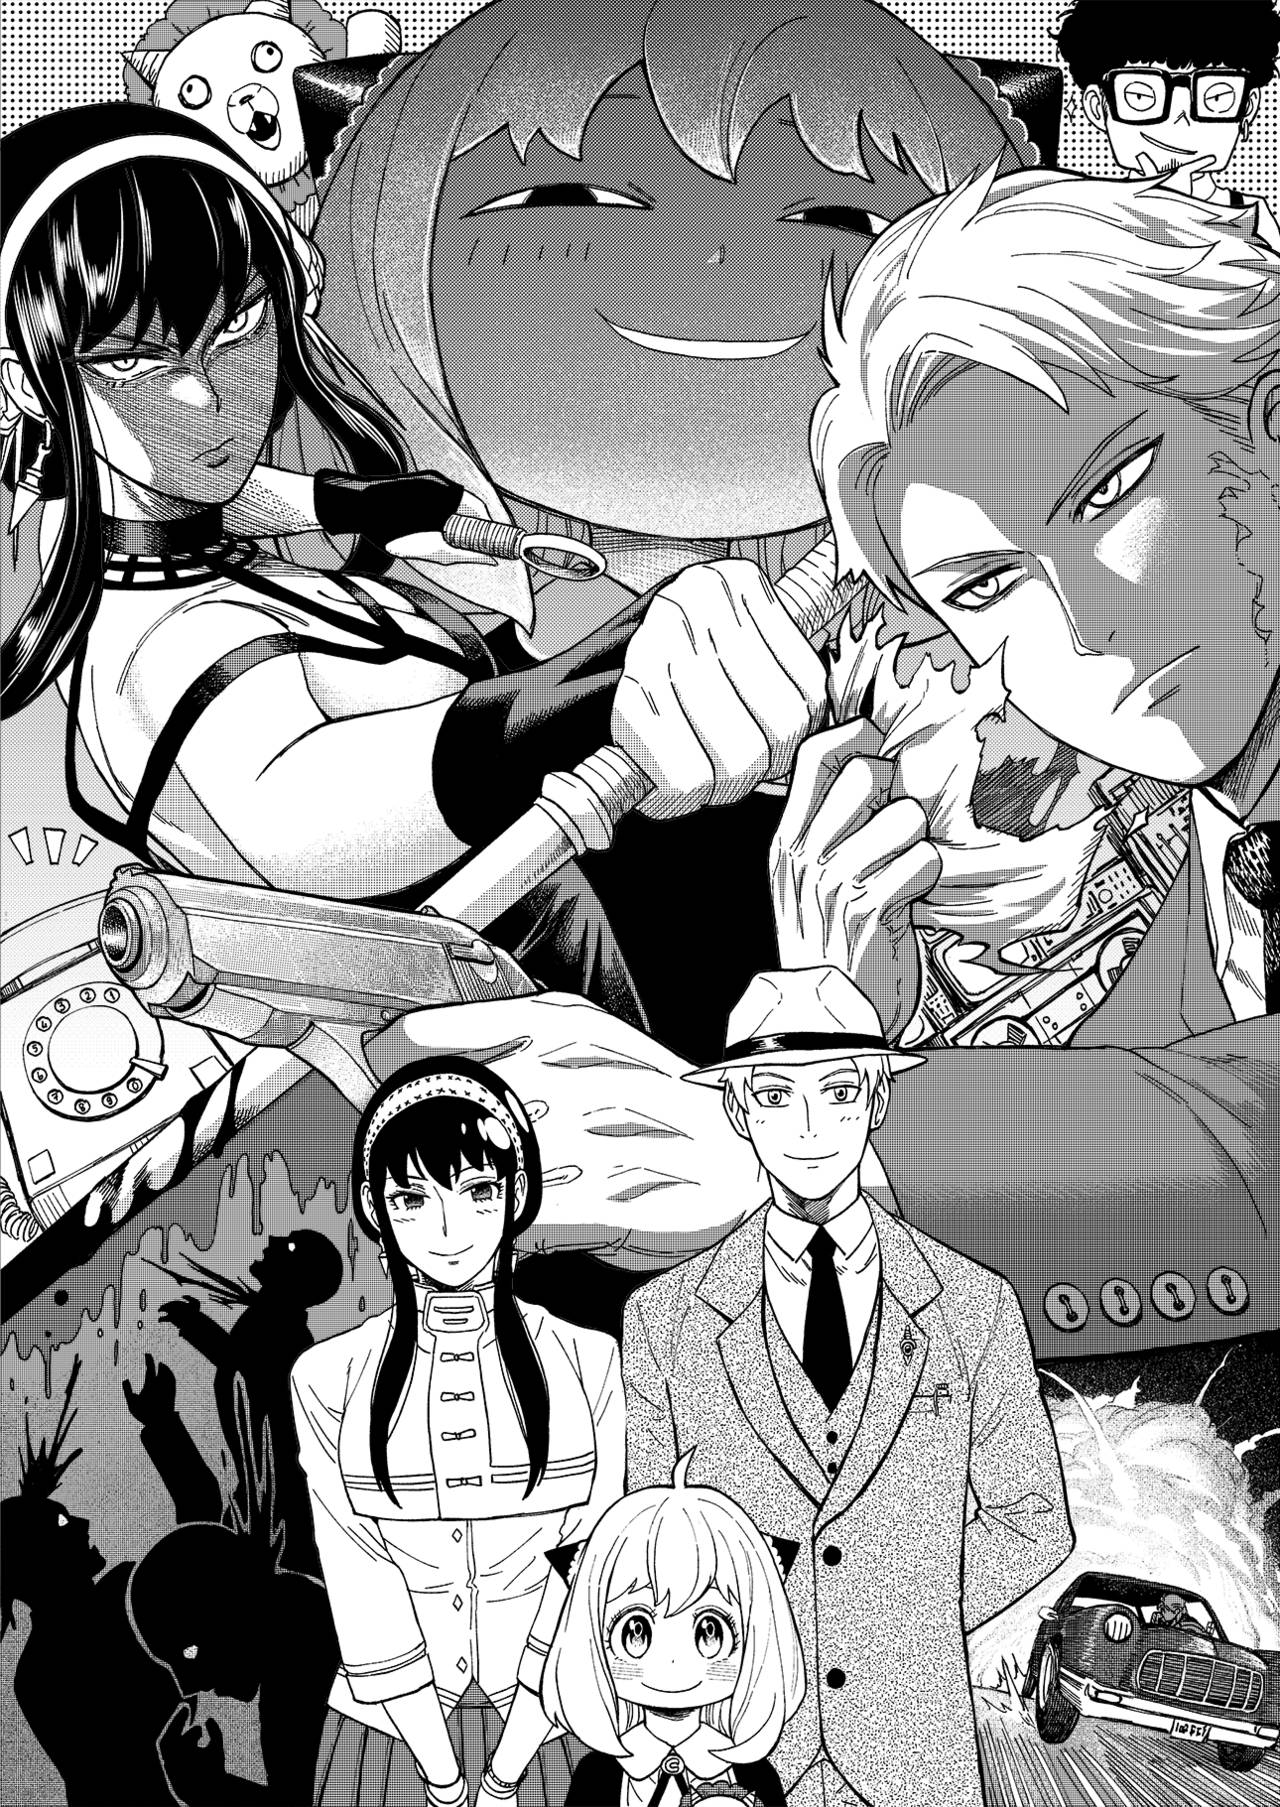 Download Spy X Family Greyscale Manga Wallpaper